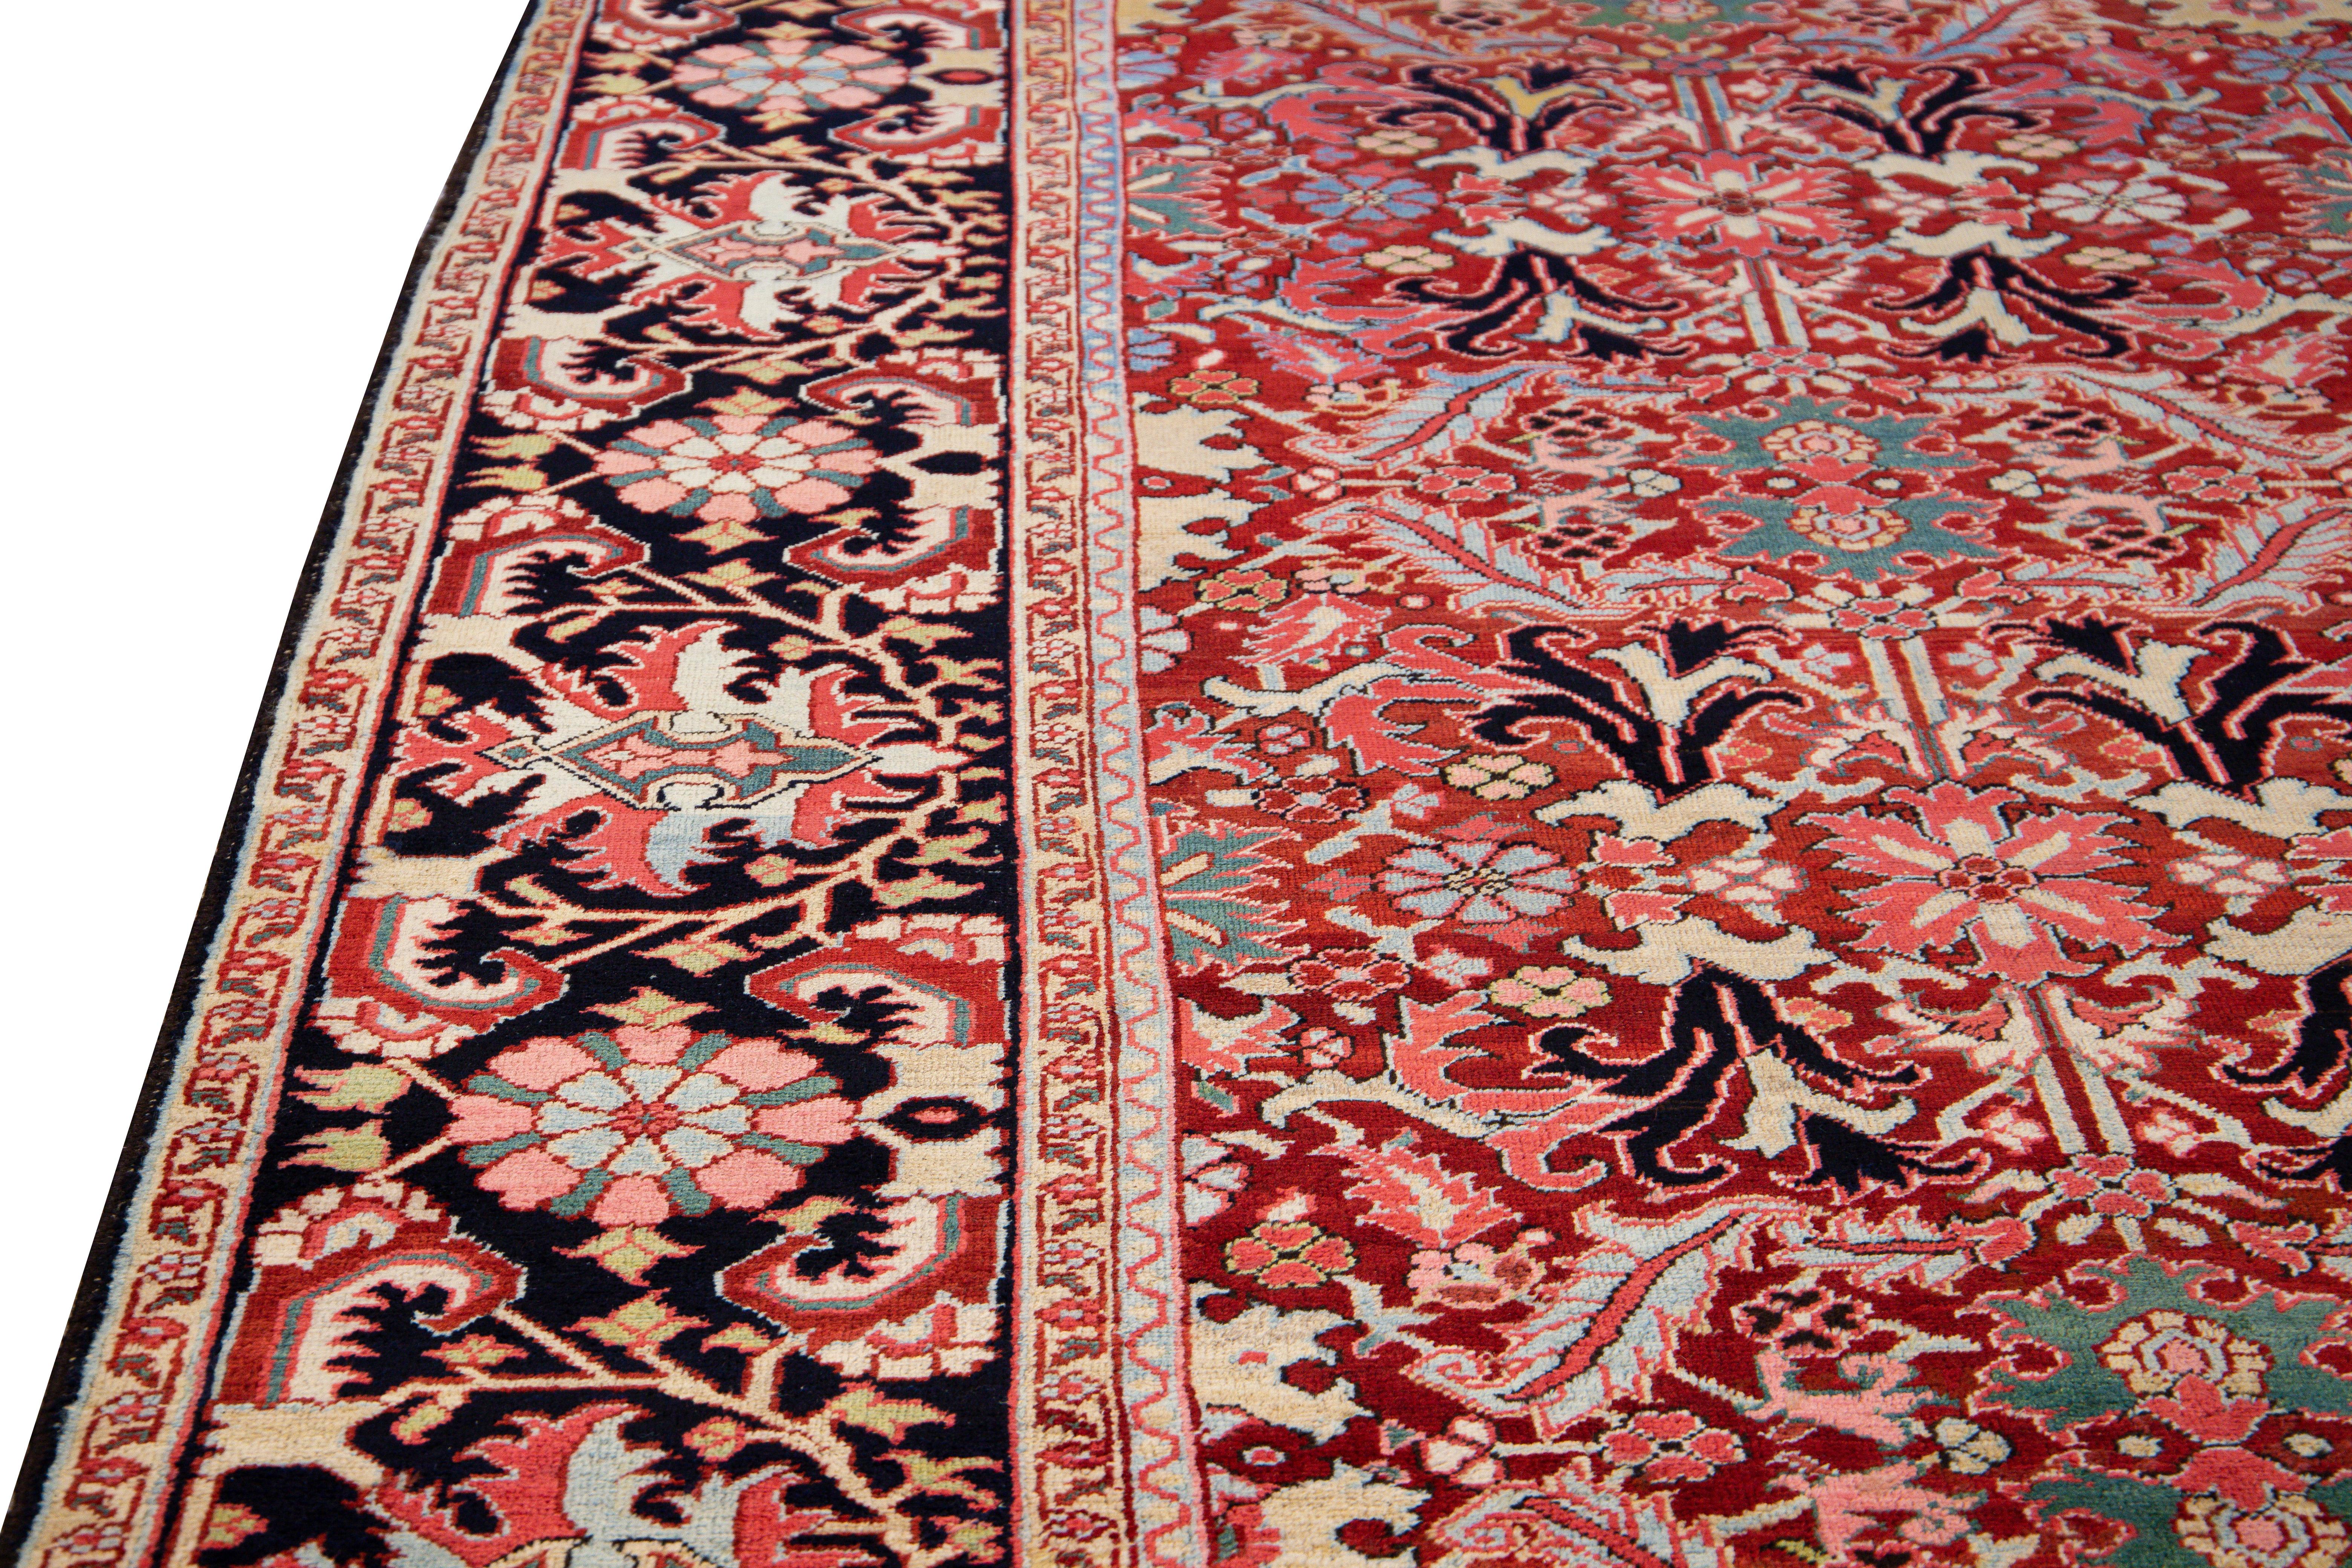 Antique Persian Heriz Handmade Multicolor Floral Designed Red Oversize Wool Rug For Sale 2